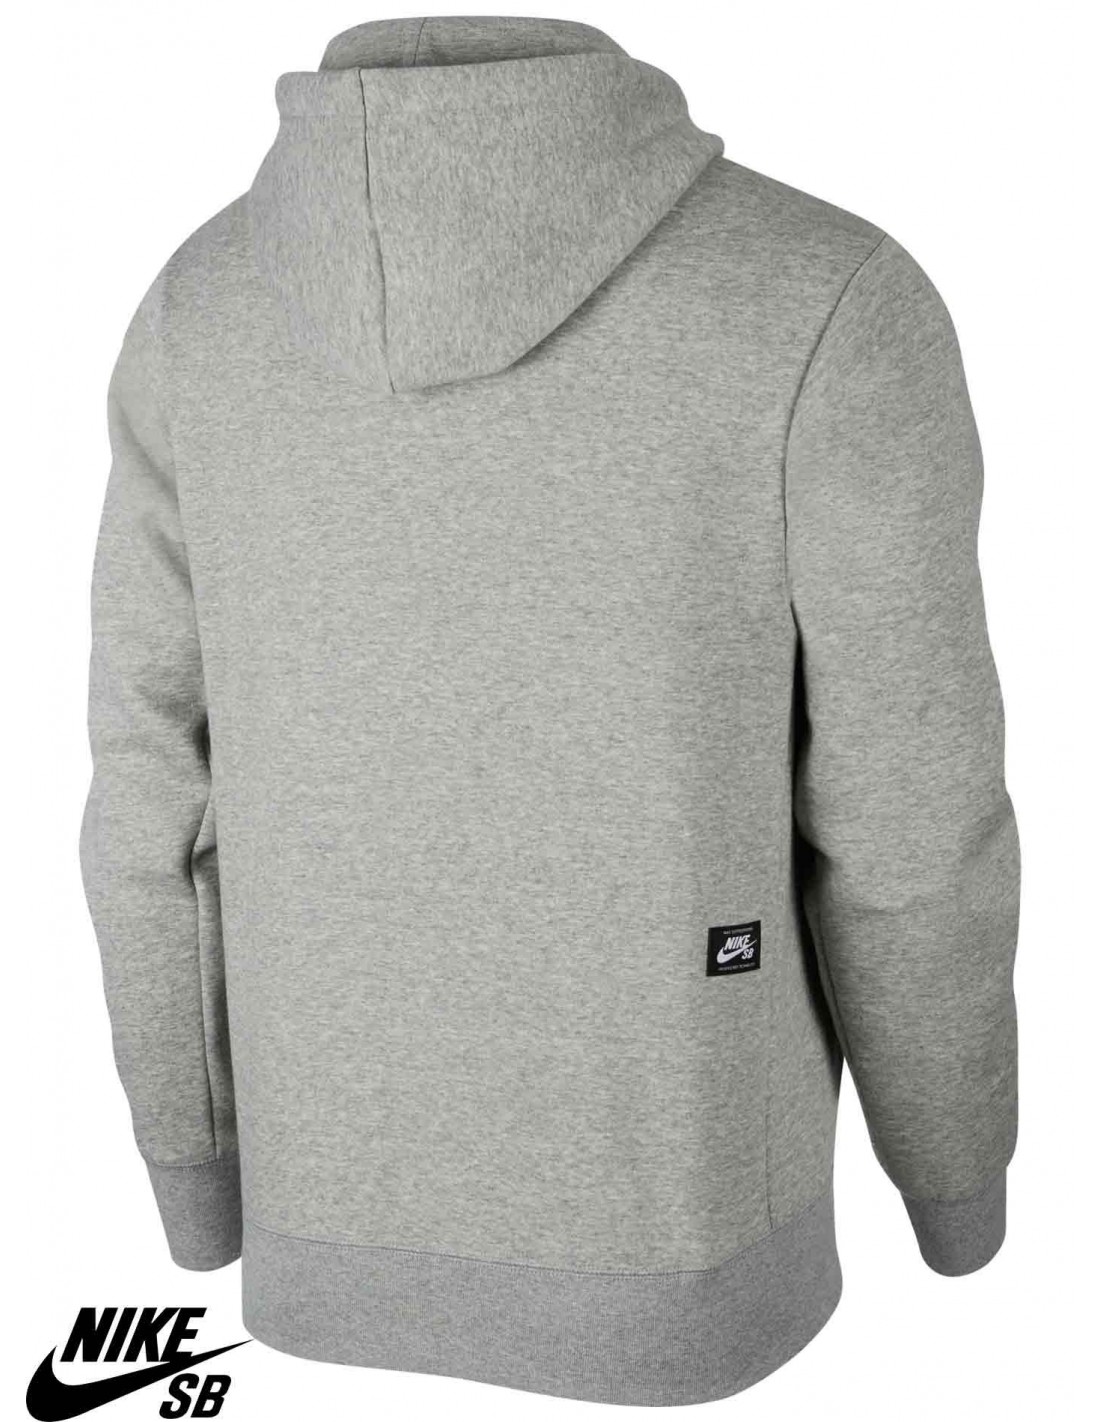 nike sb gray hoodie